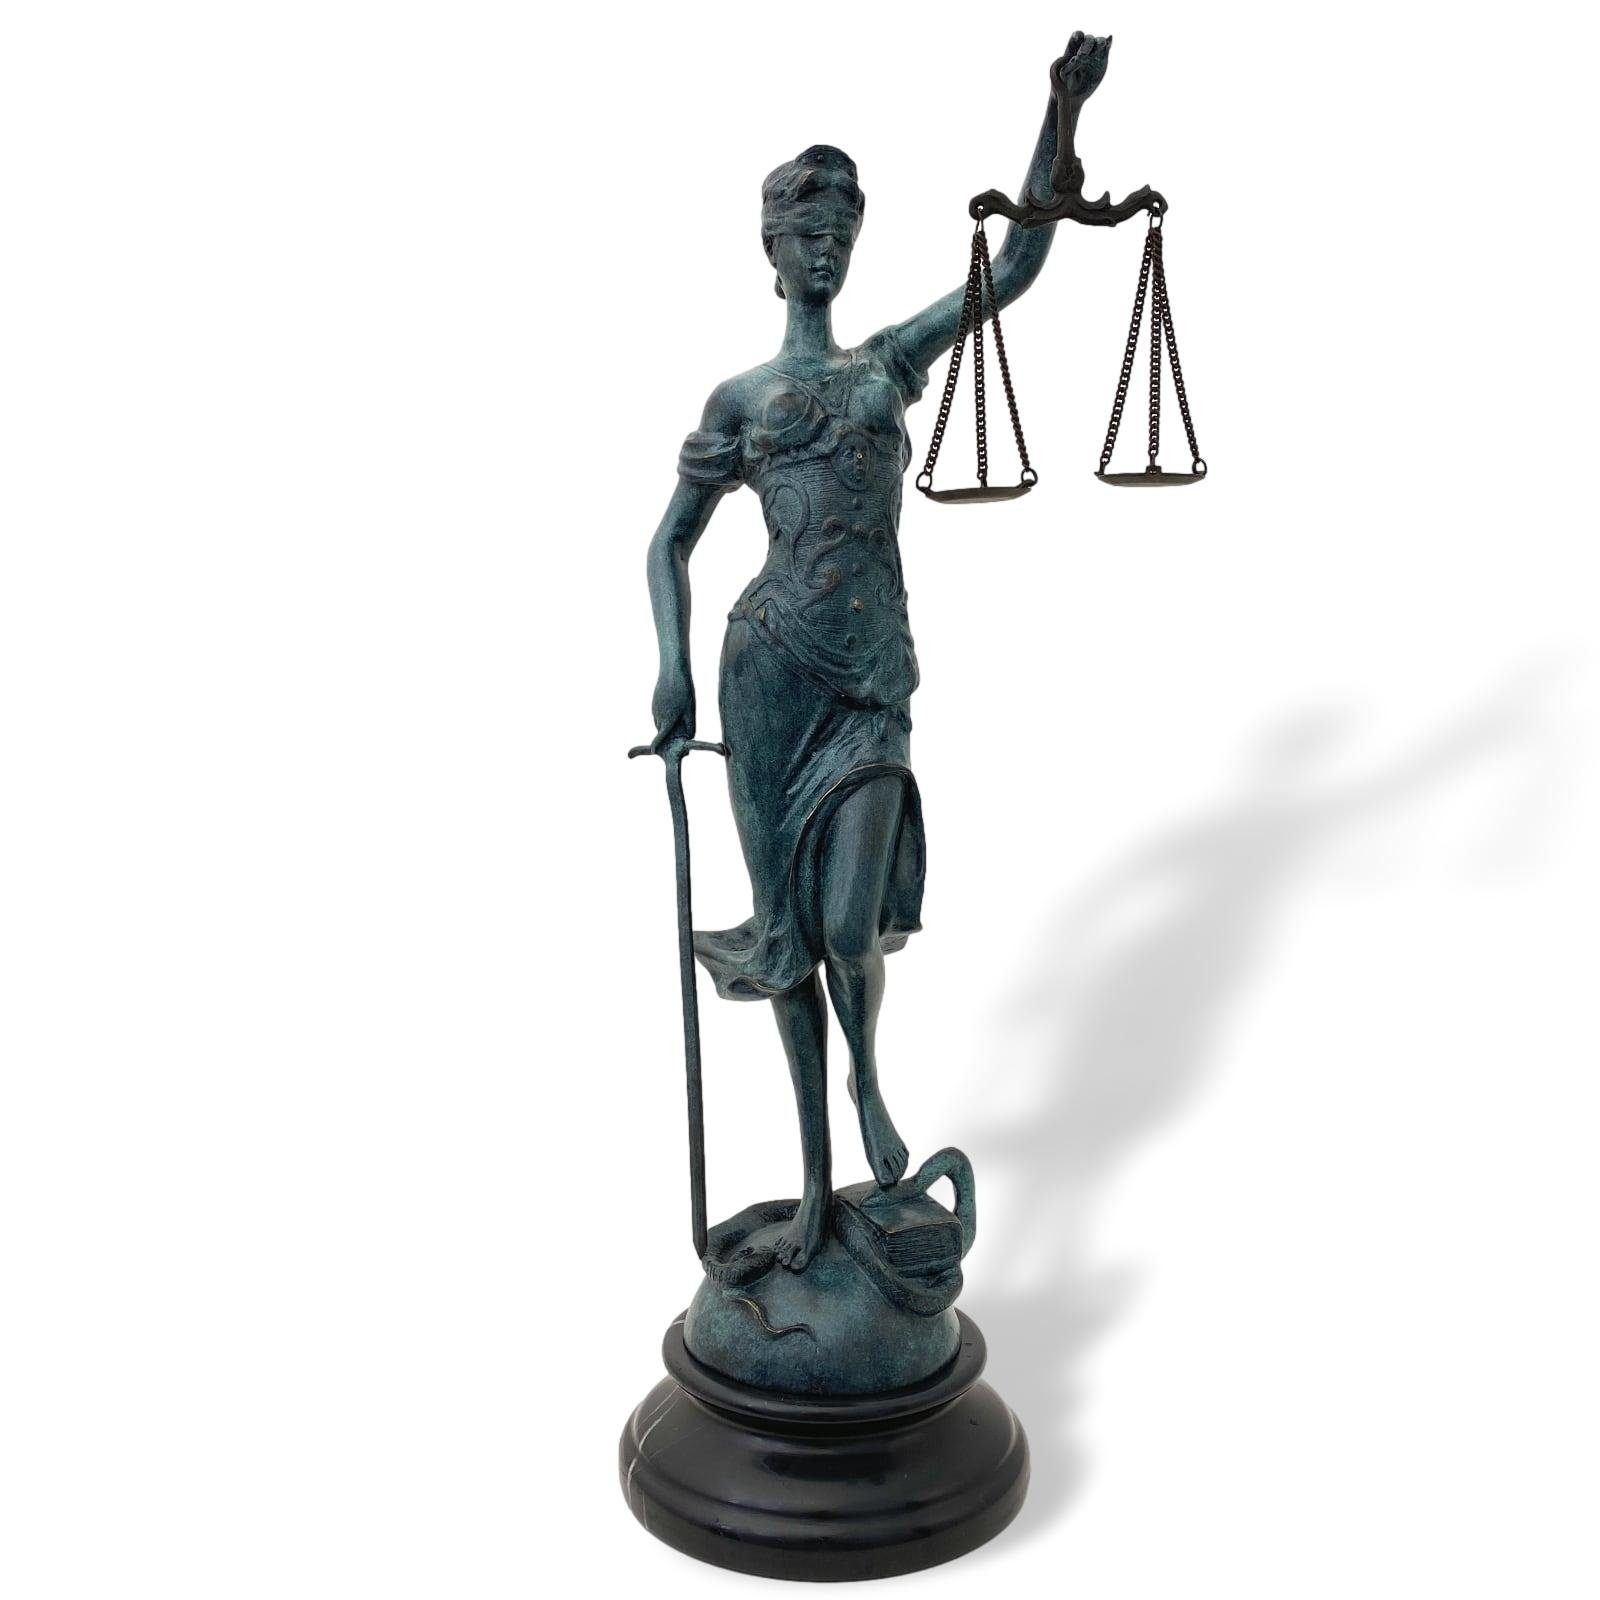 Aubaho Skulptur Bronzefigur Justitia Justizia mit Waage Bronze Skulptur Statue Antik-S